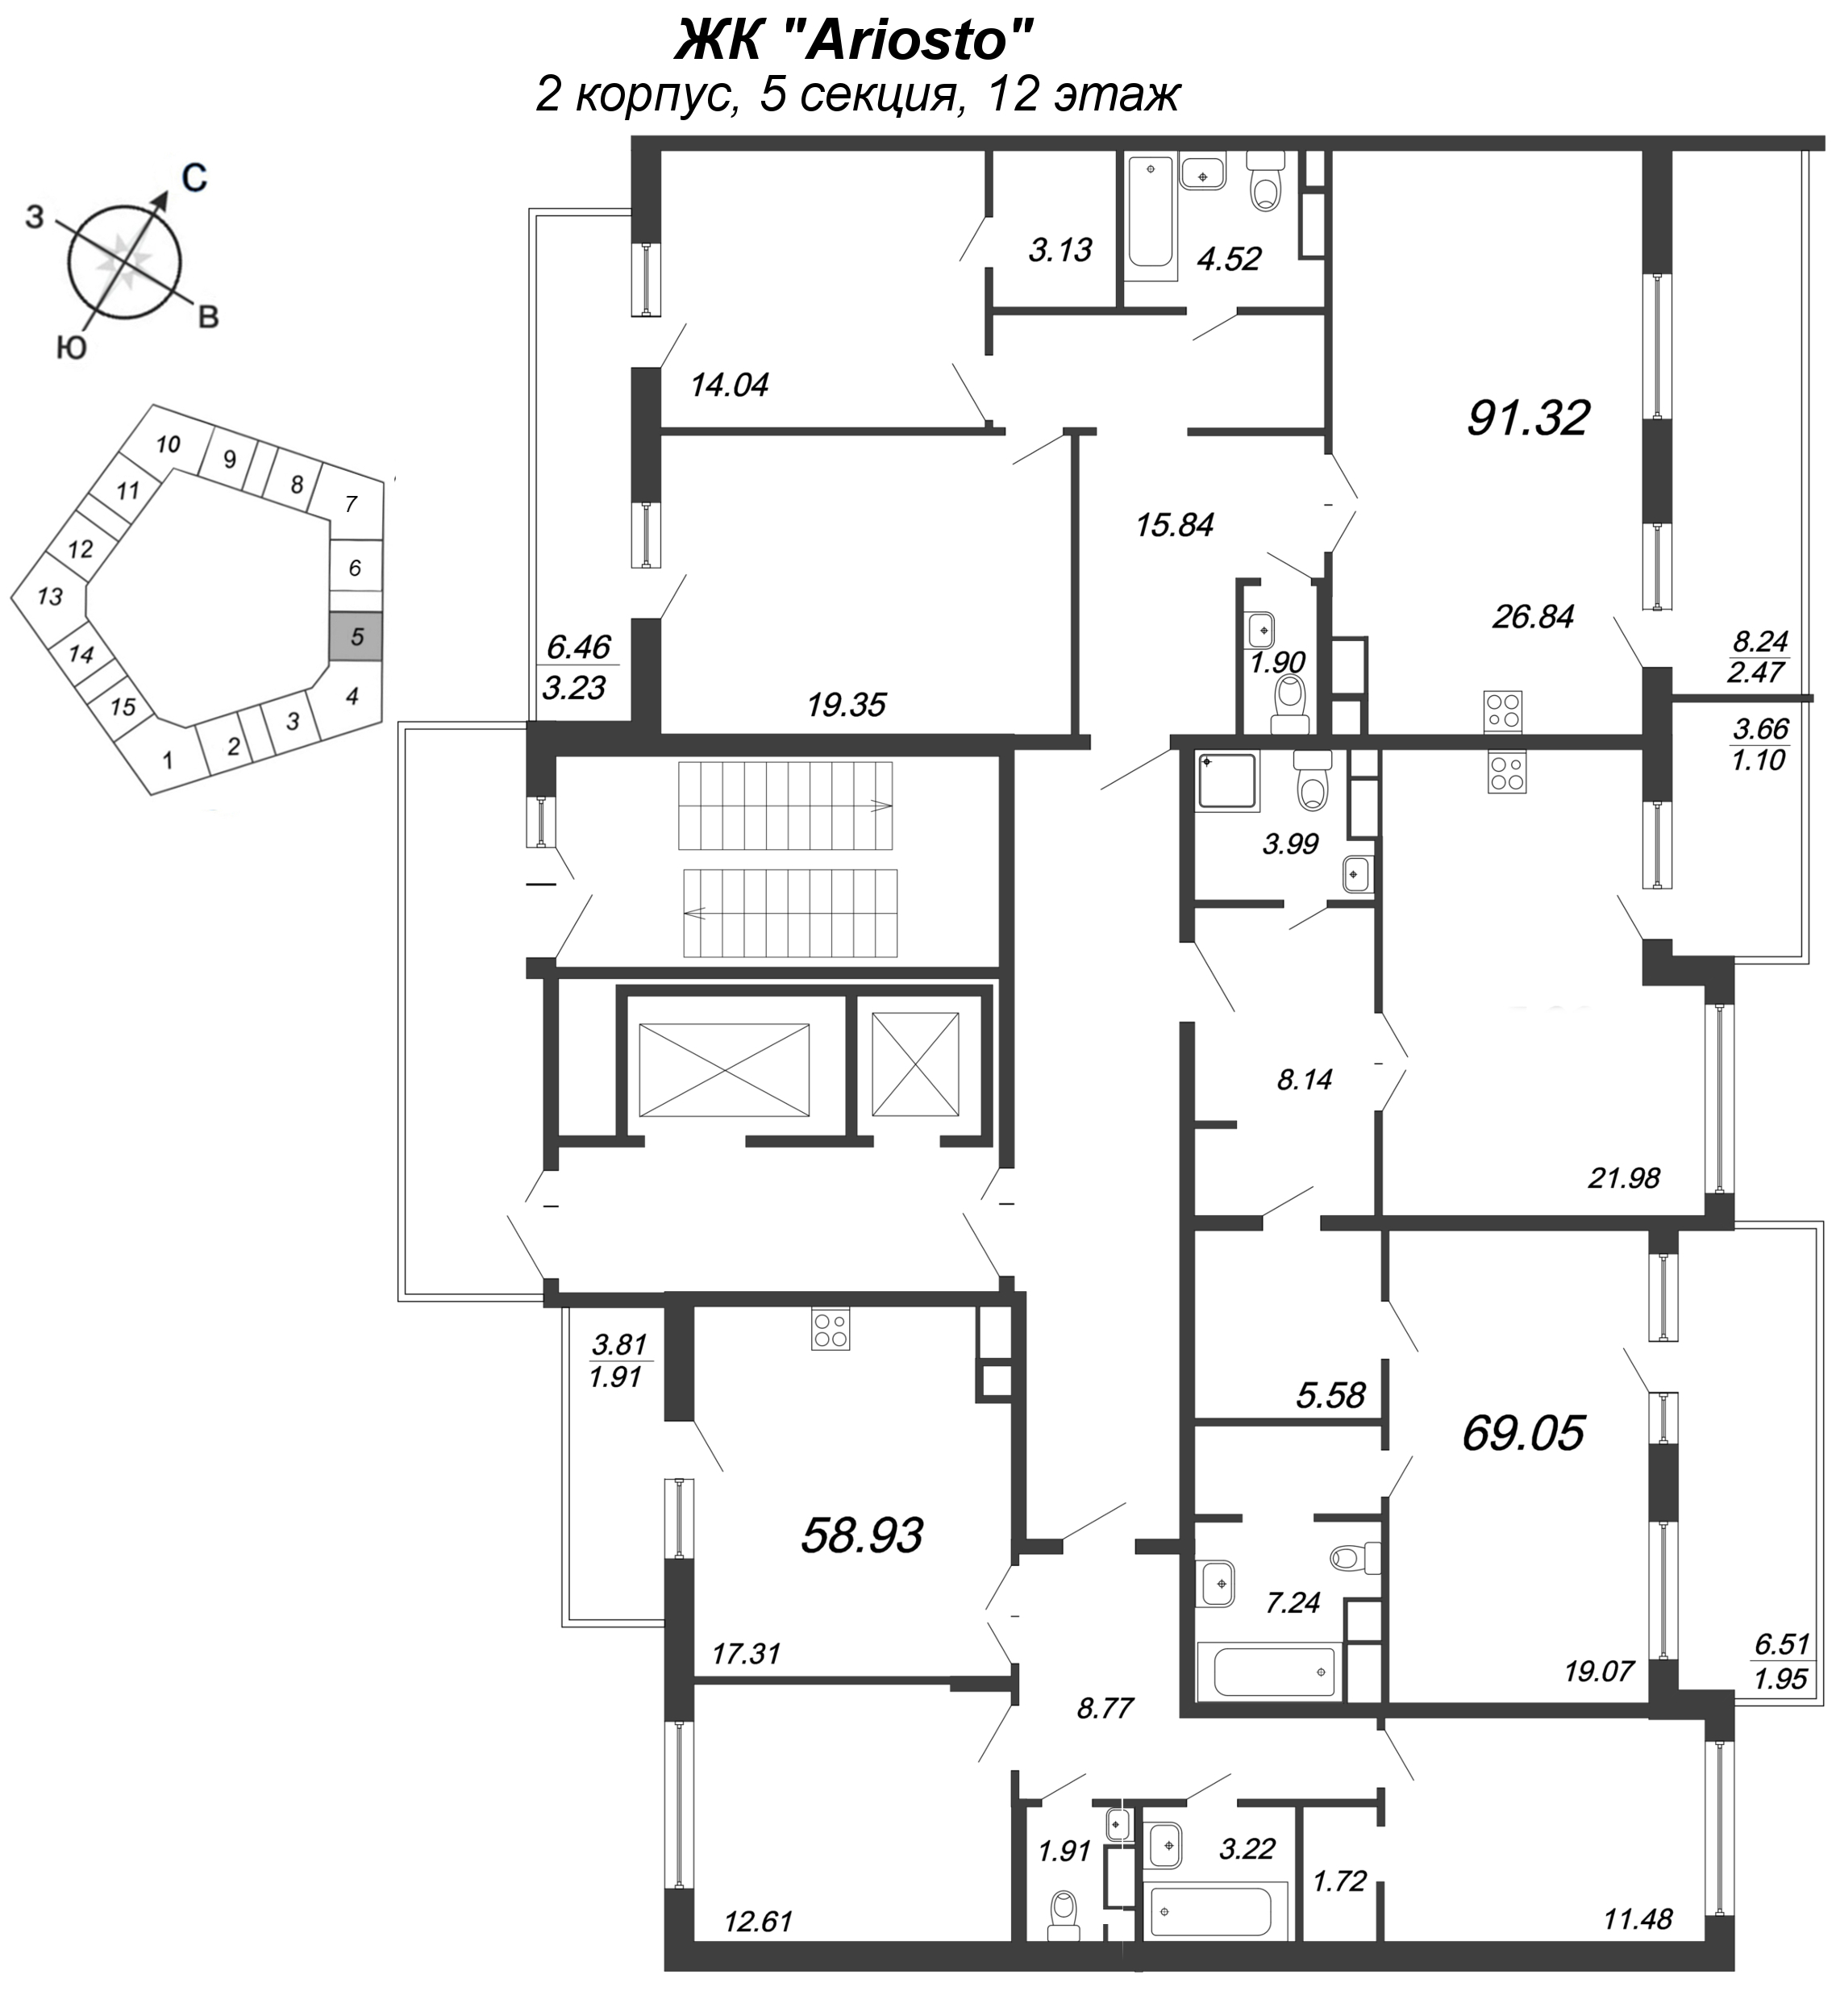 2-комнатная (Евро) квартира, 69.05 м² - планировка этажа